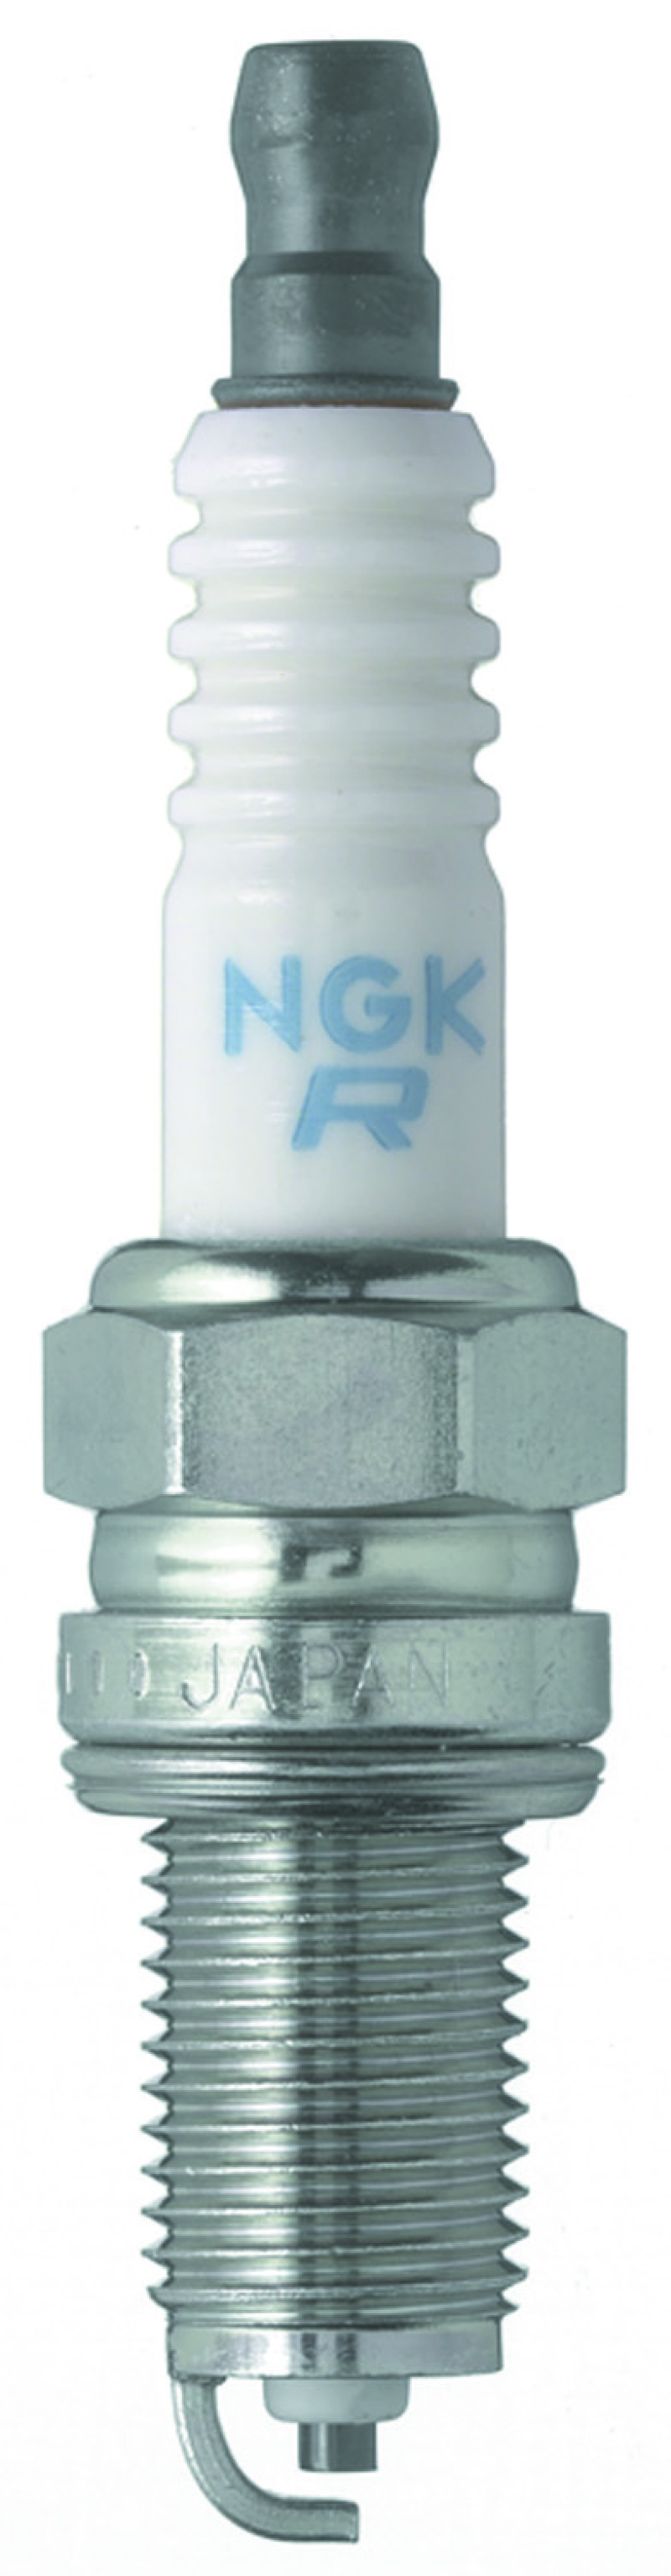 NGK Nickel Spark Plug Box of 10 (DCPR7E-N-10) - 4983